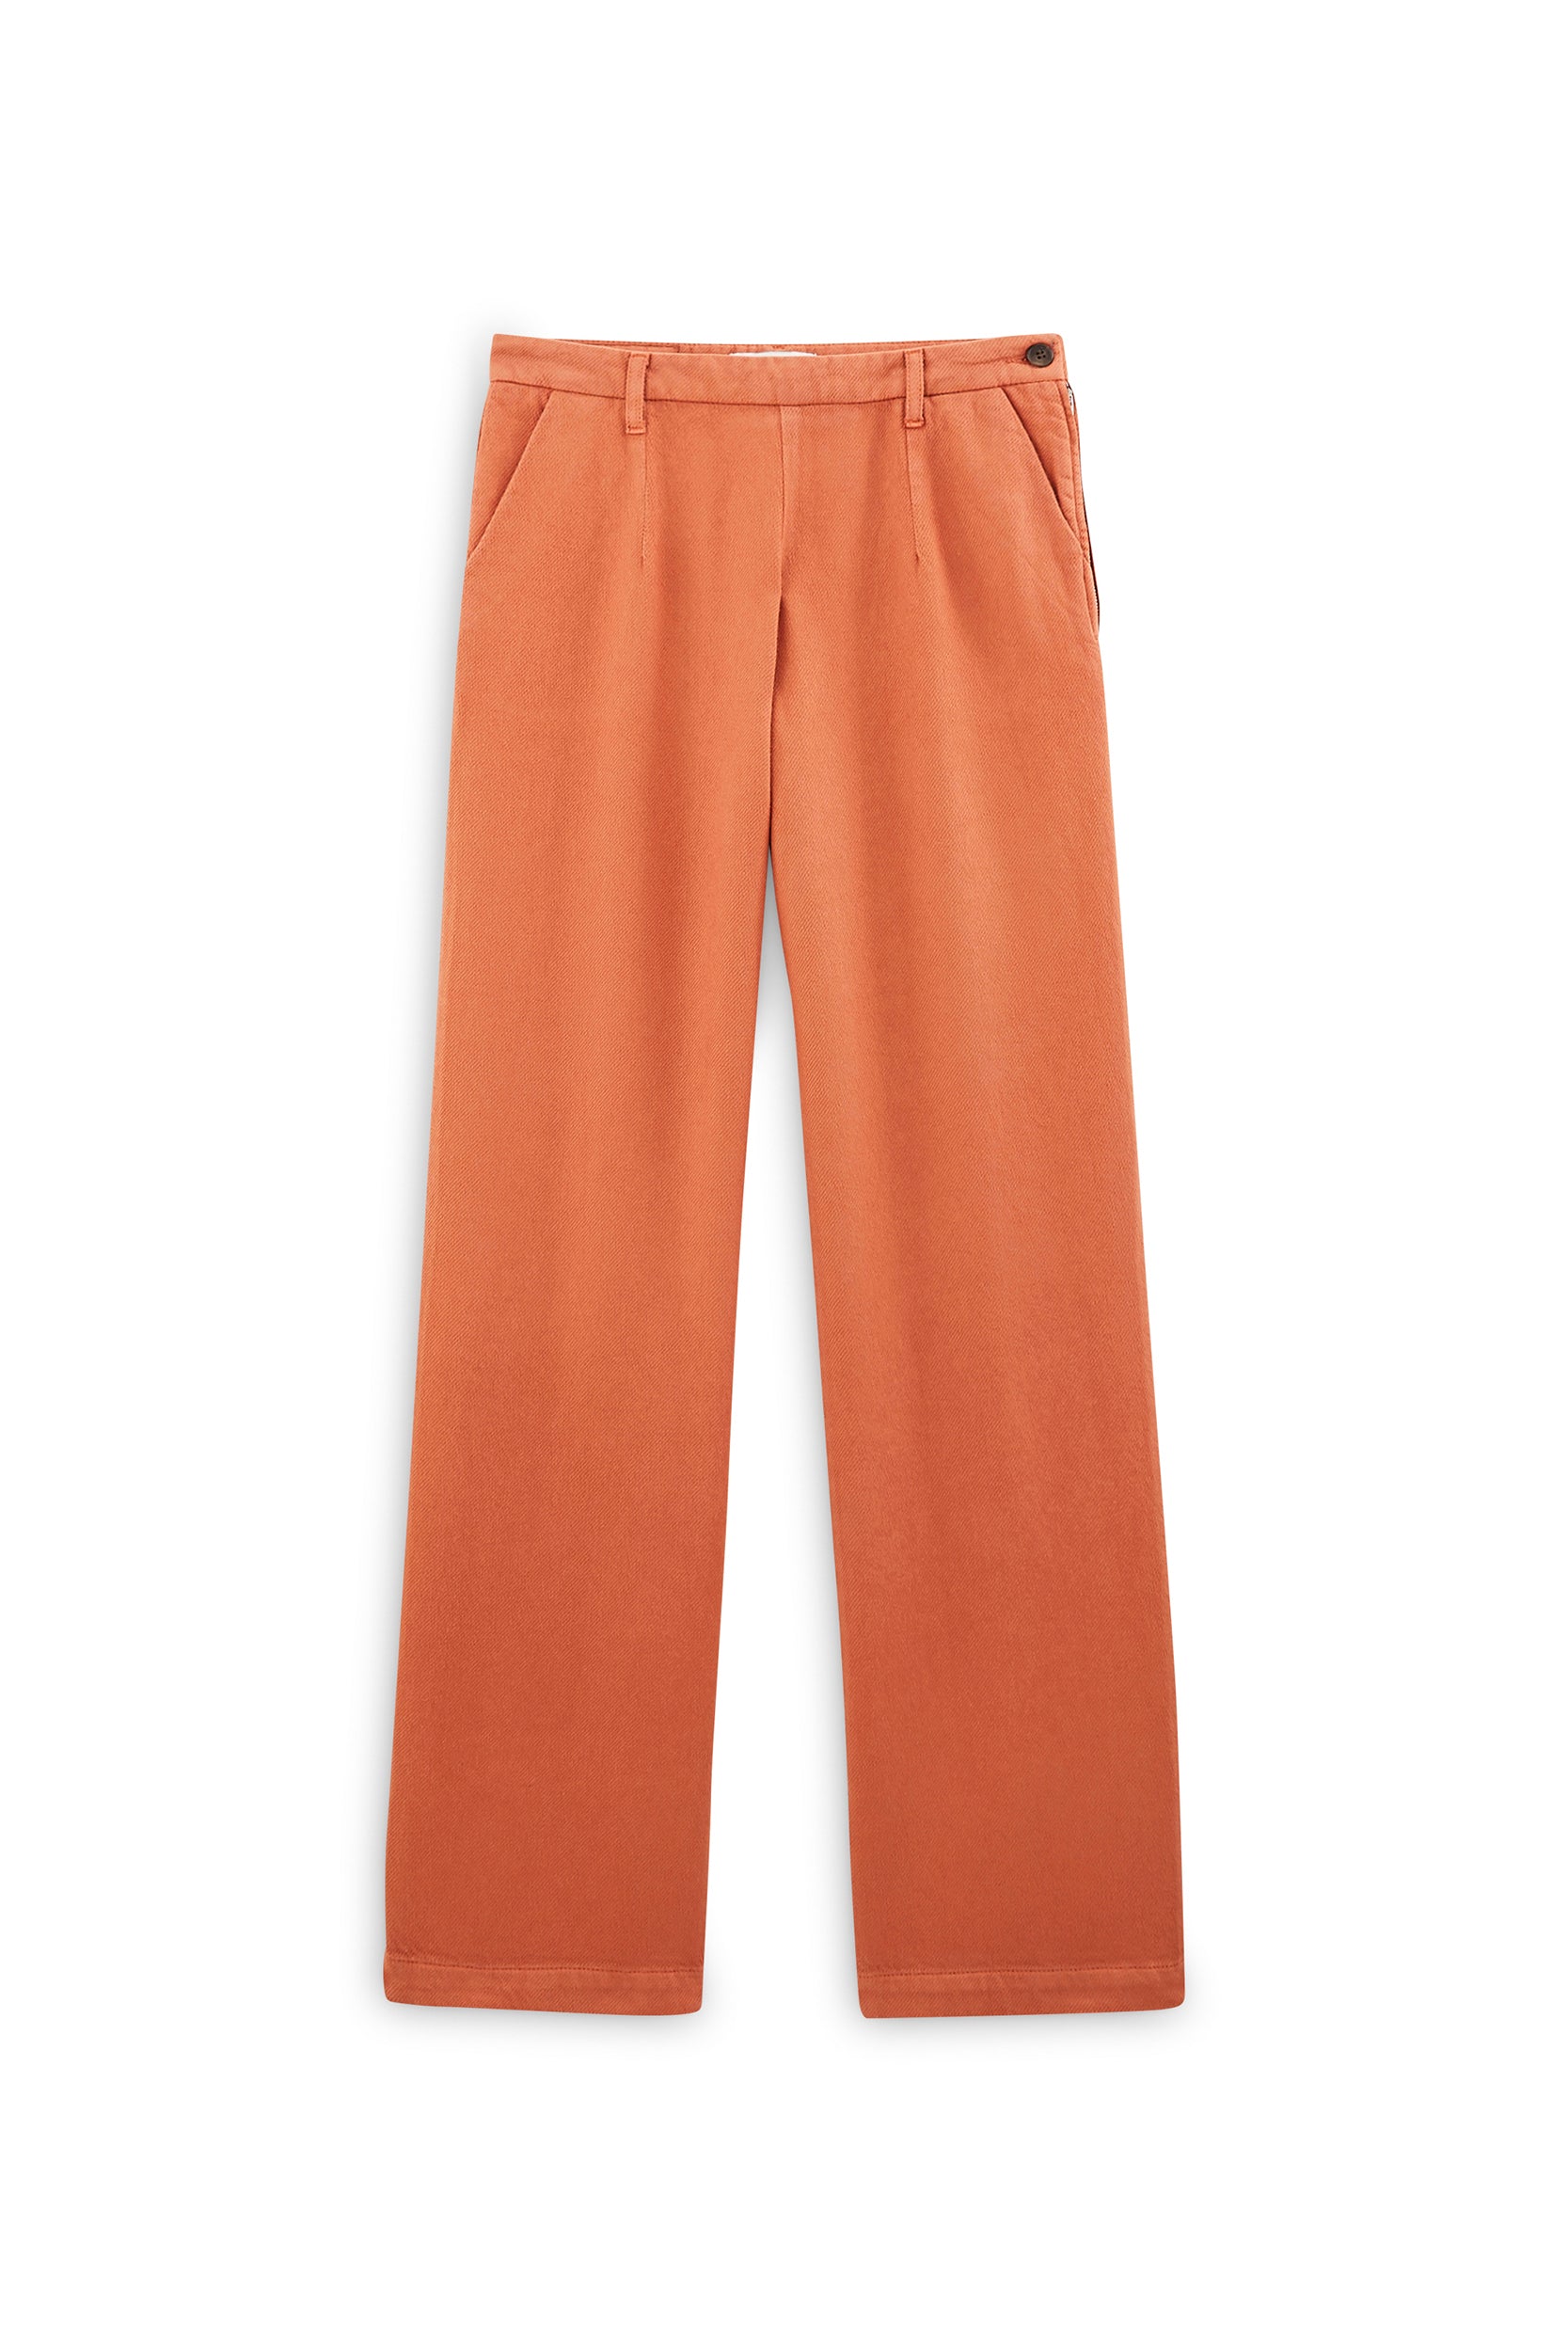 Pantalon Paolo orange